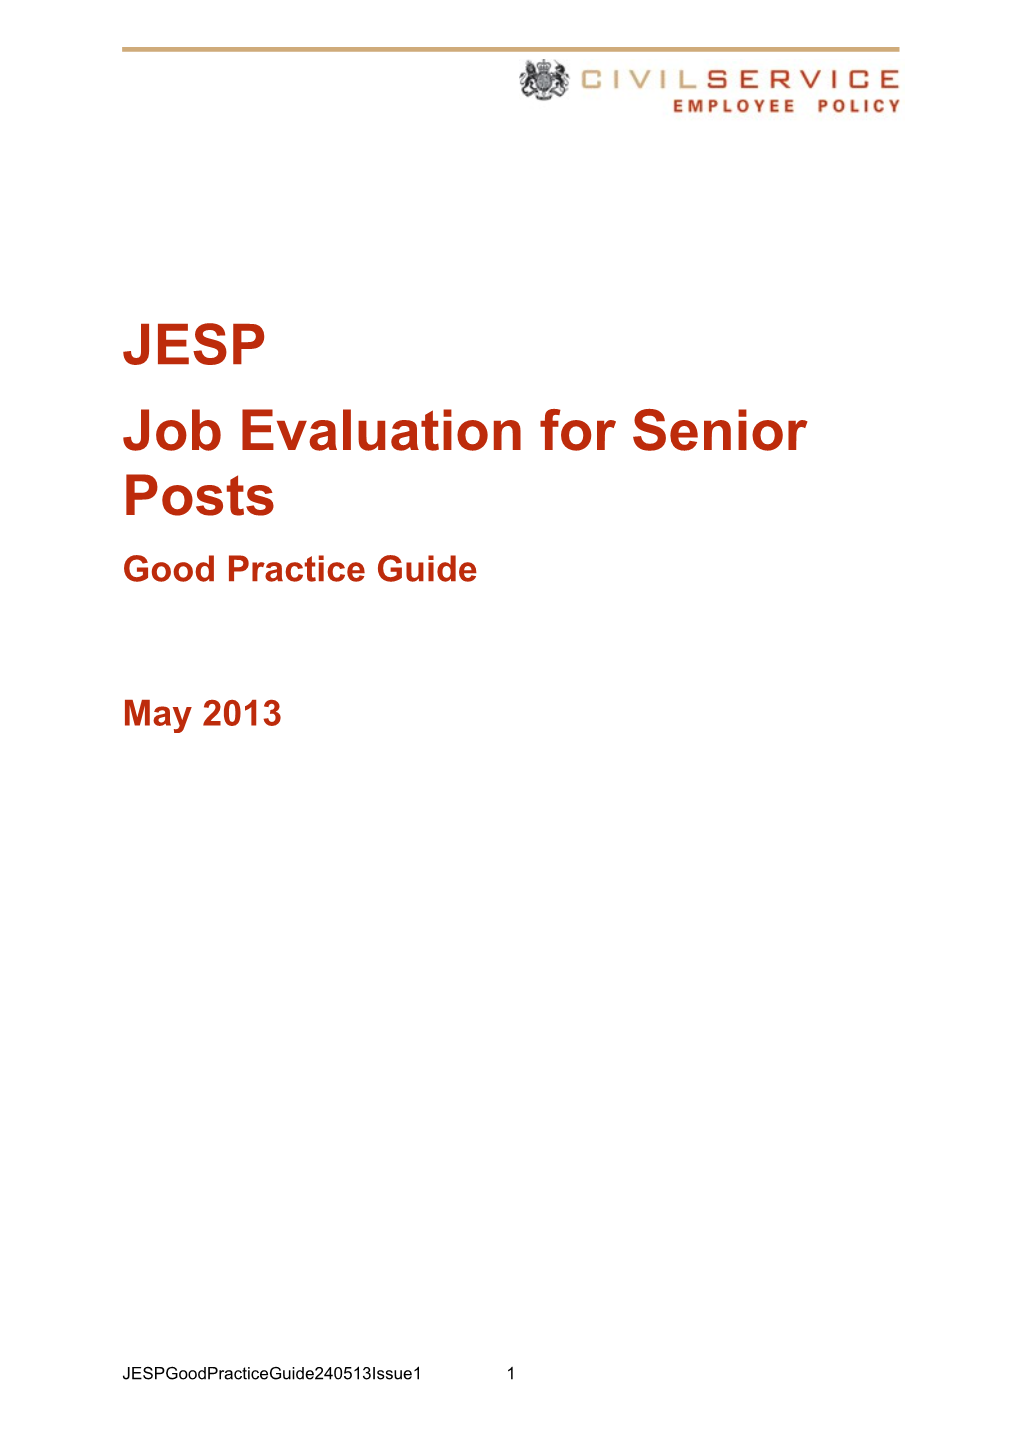 Job Evaluation for Senior Posts